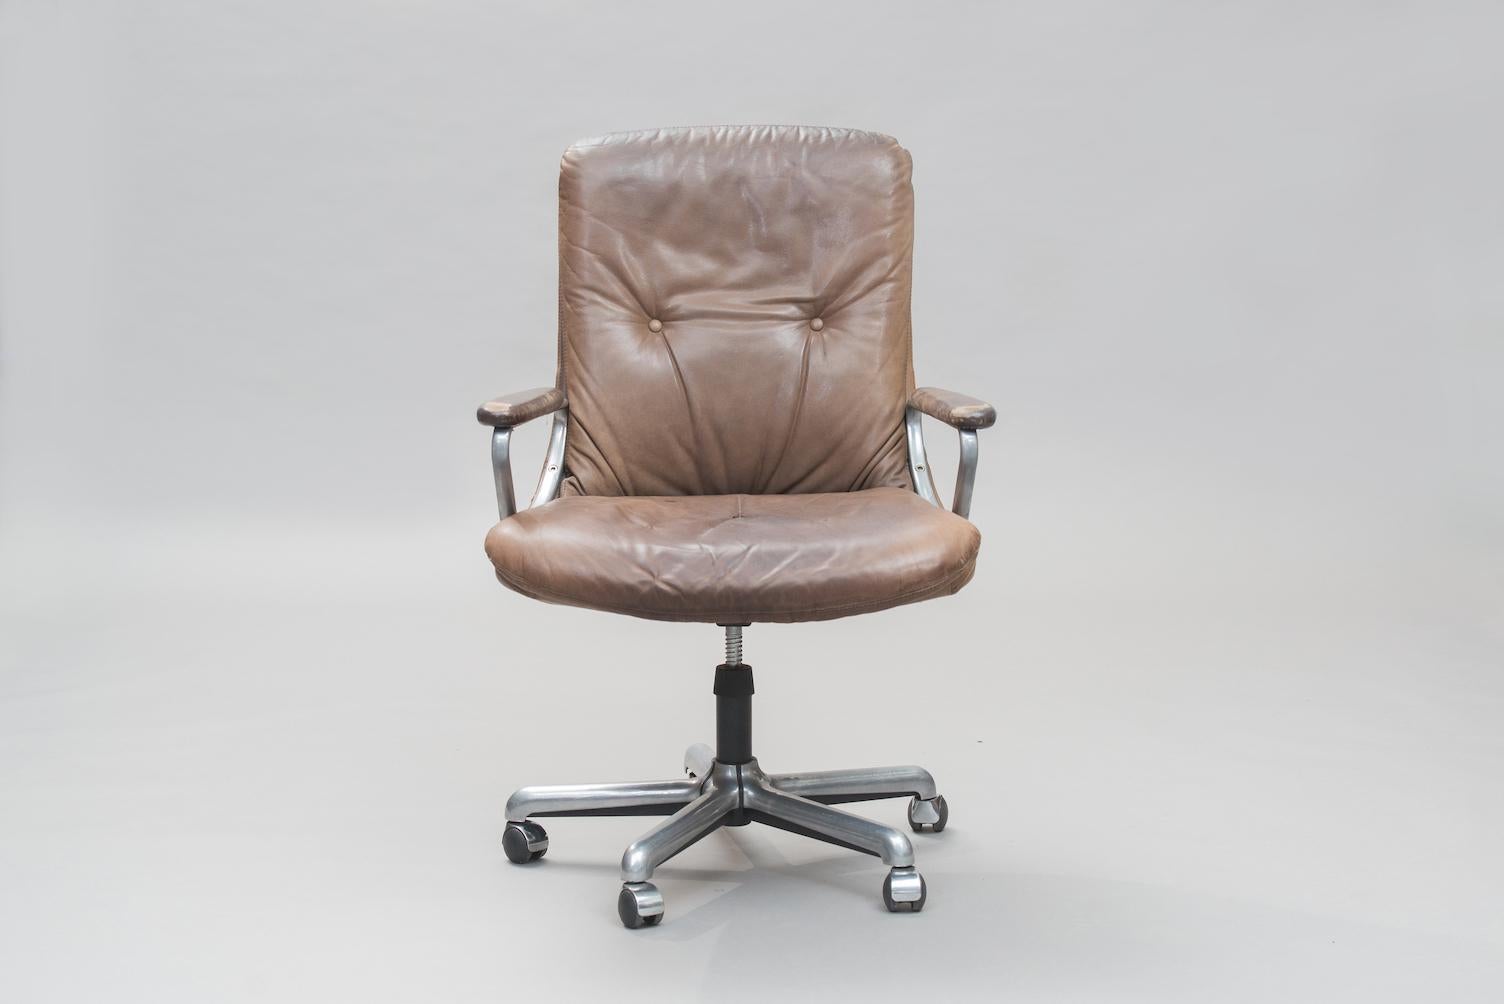 Late 20th Century Italian Mid-Century Modern Desk Chair